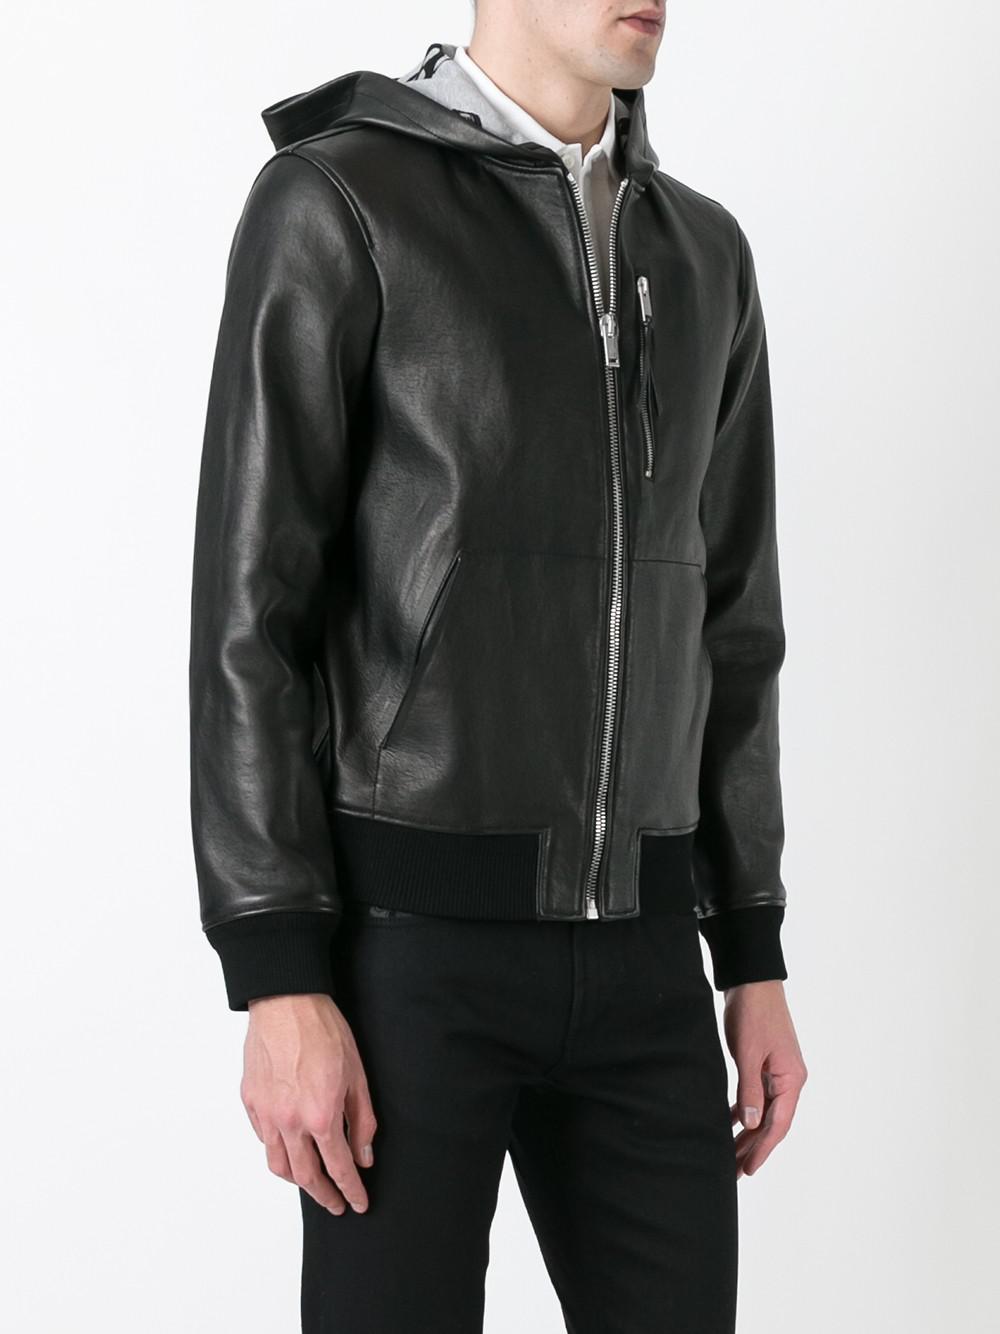 Alexander McQueen Leather Hooded Bomber Jacket in Black for Men - Lyst